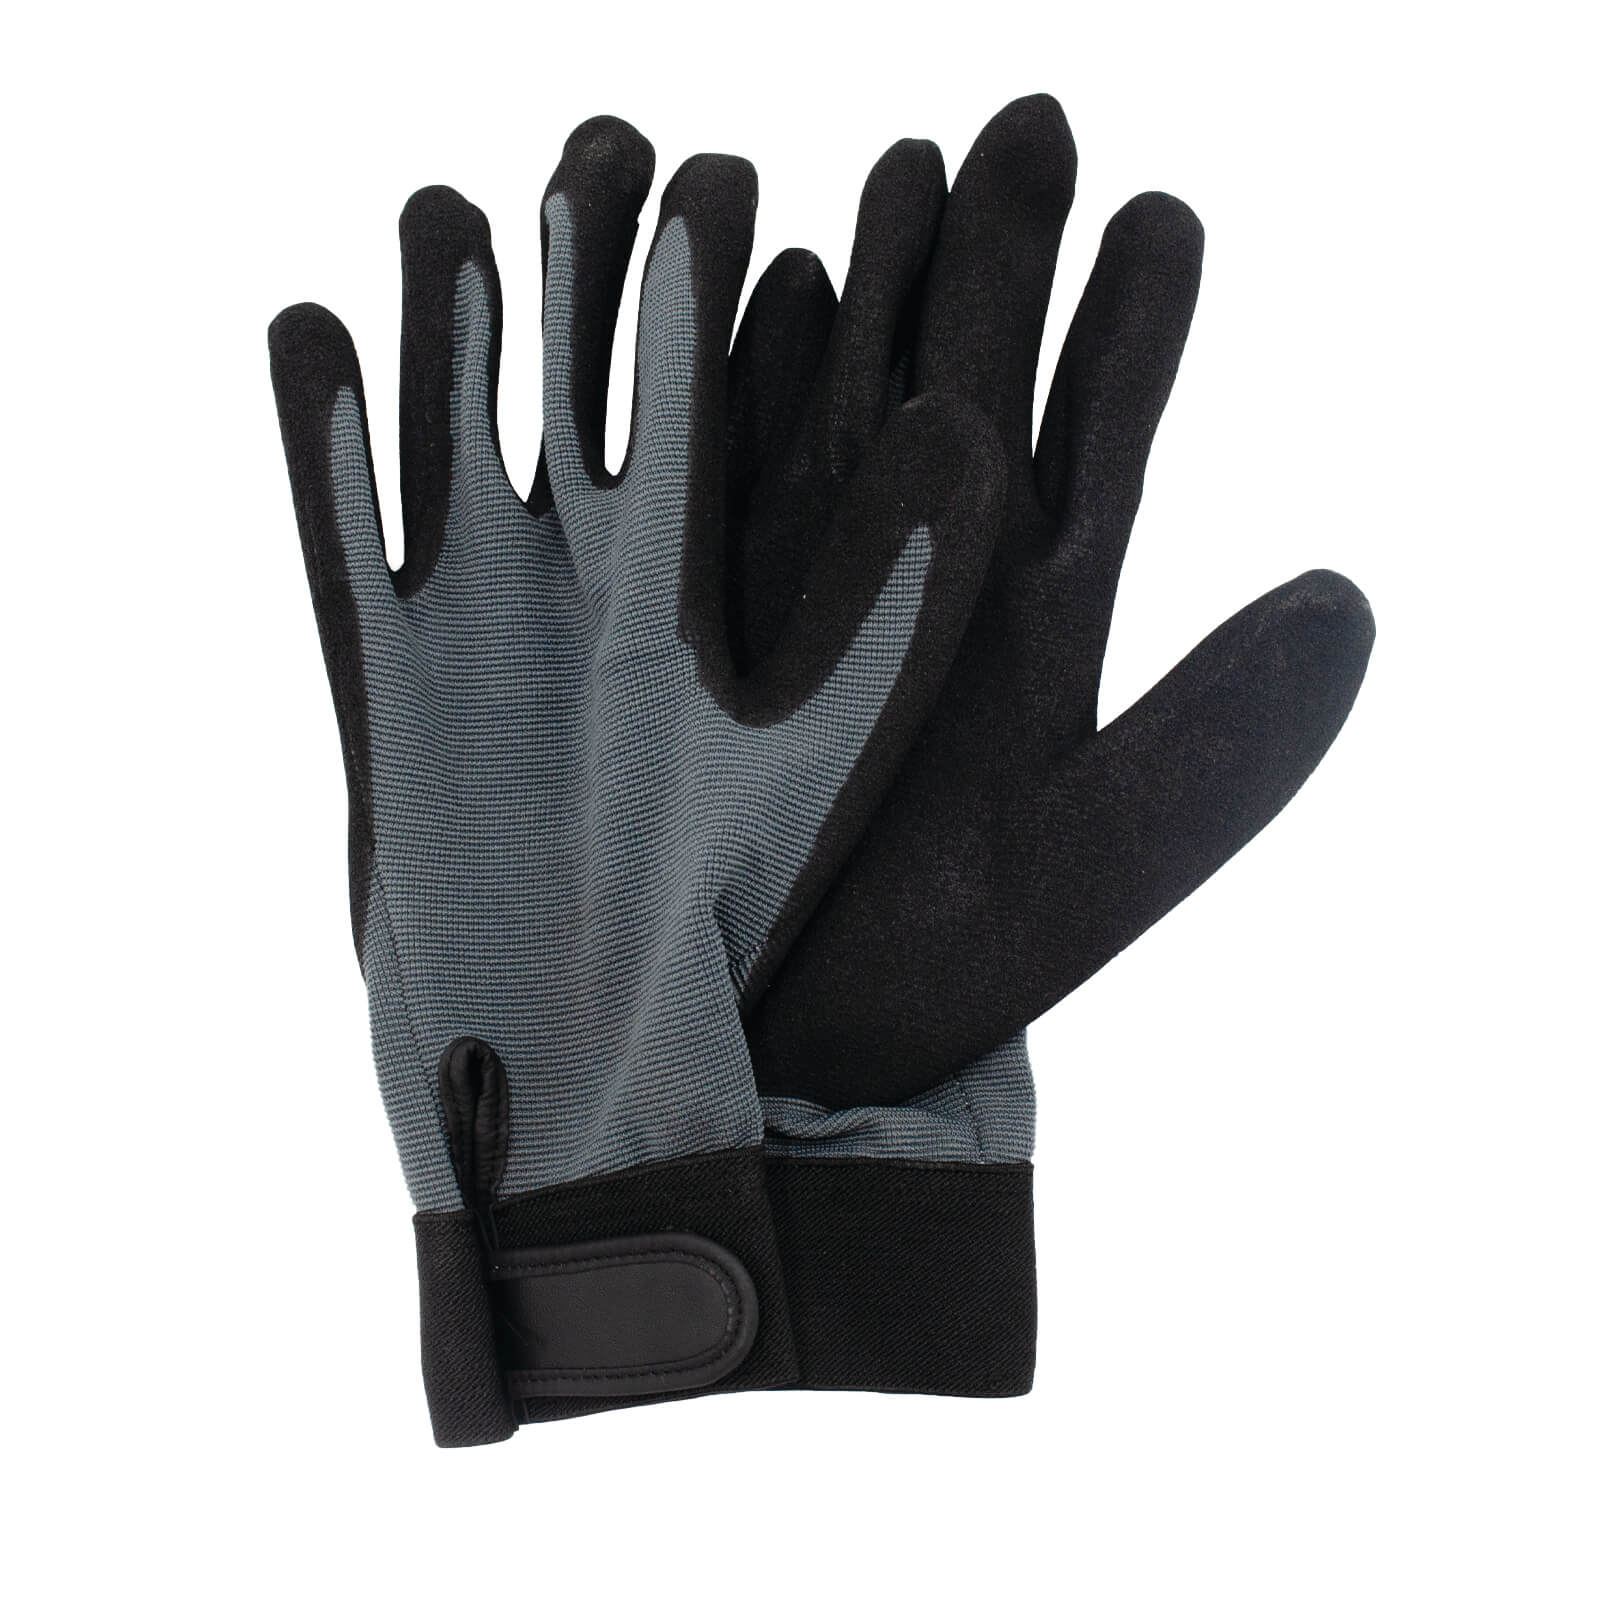 StoneBreaker Spandex Work Gloves - Medium